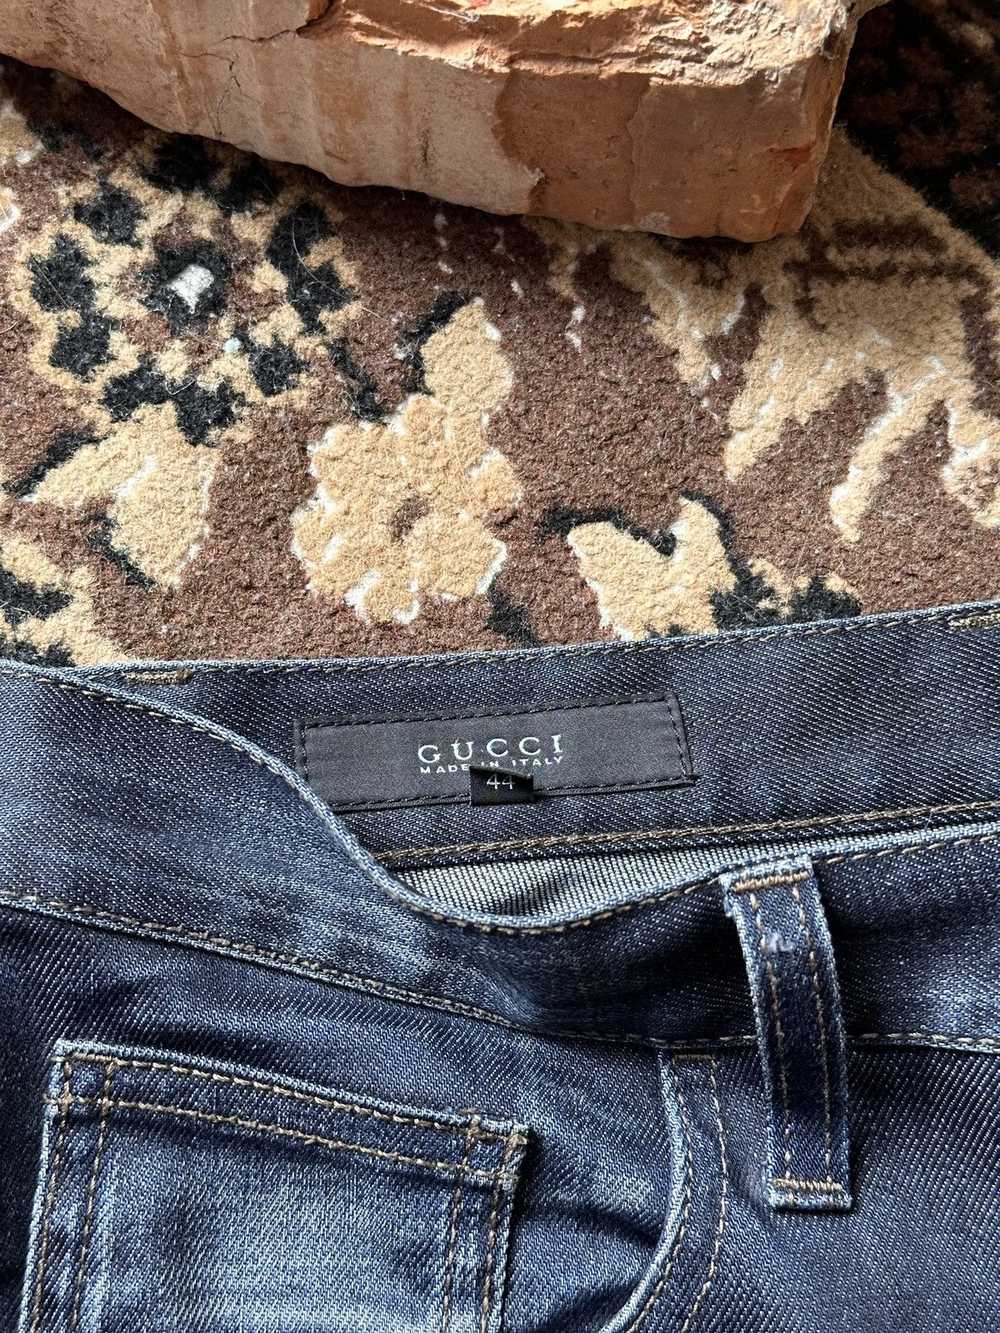 Gucci GUCCI denim LEATHER Logo Jeans Pants - image 11